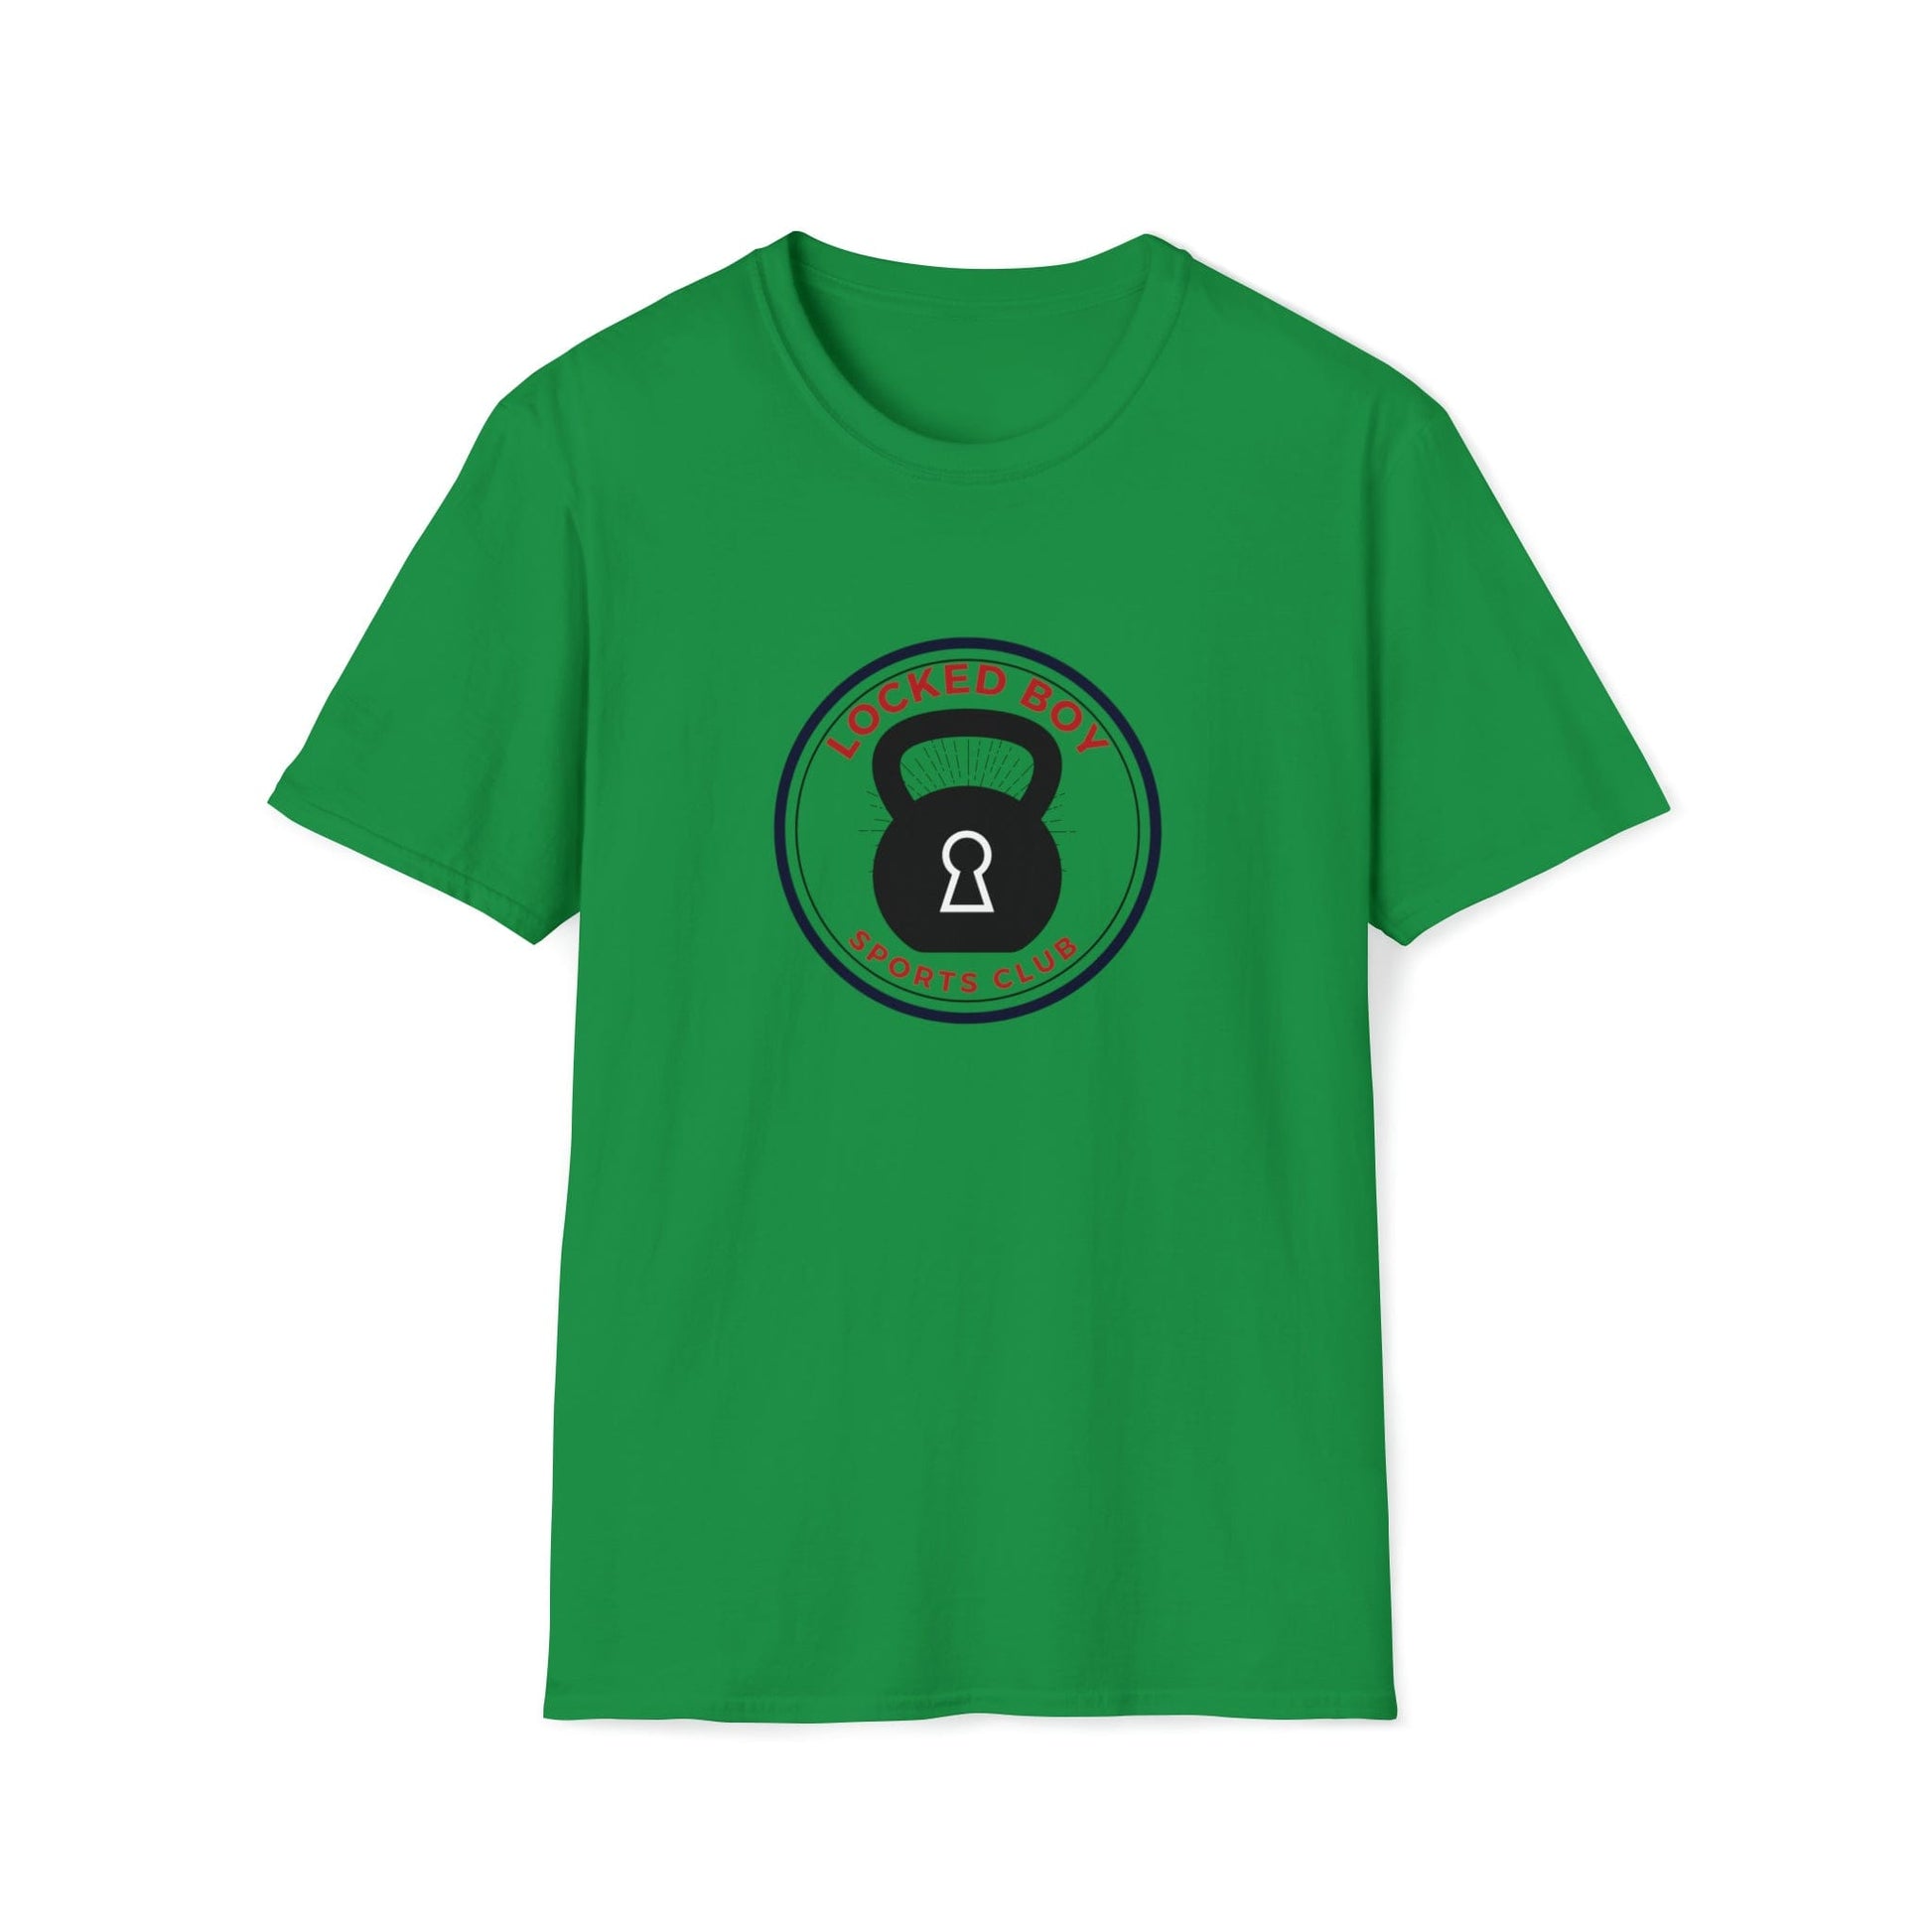 T-Shirt Irish Green / S LockedBoy Sports Club - Chastity Tshirt Kettlebell LEATHERDADDY BATOR